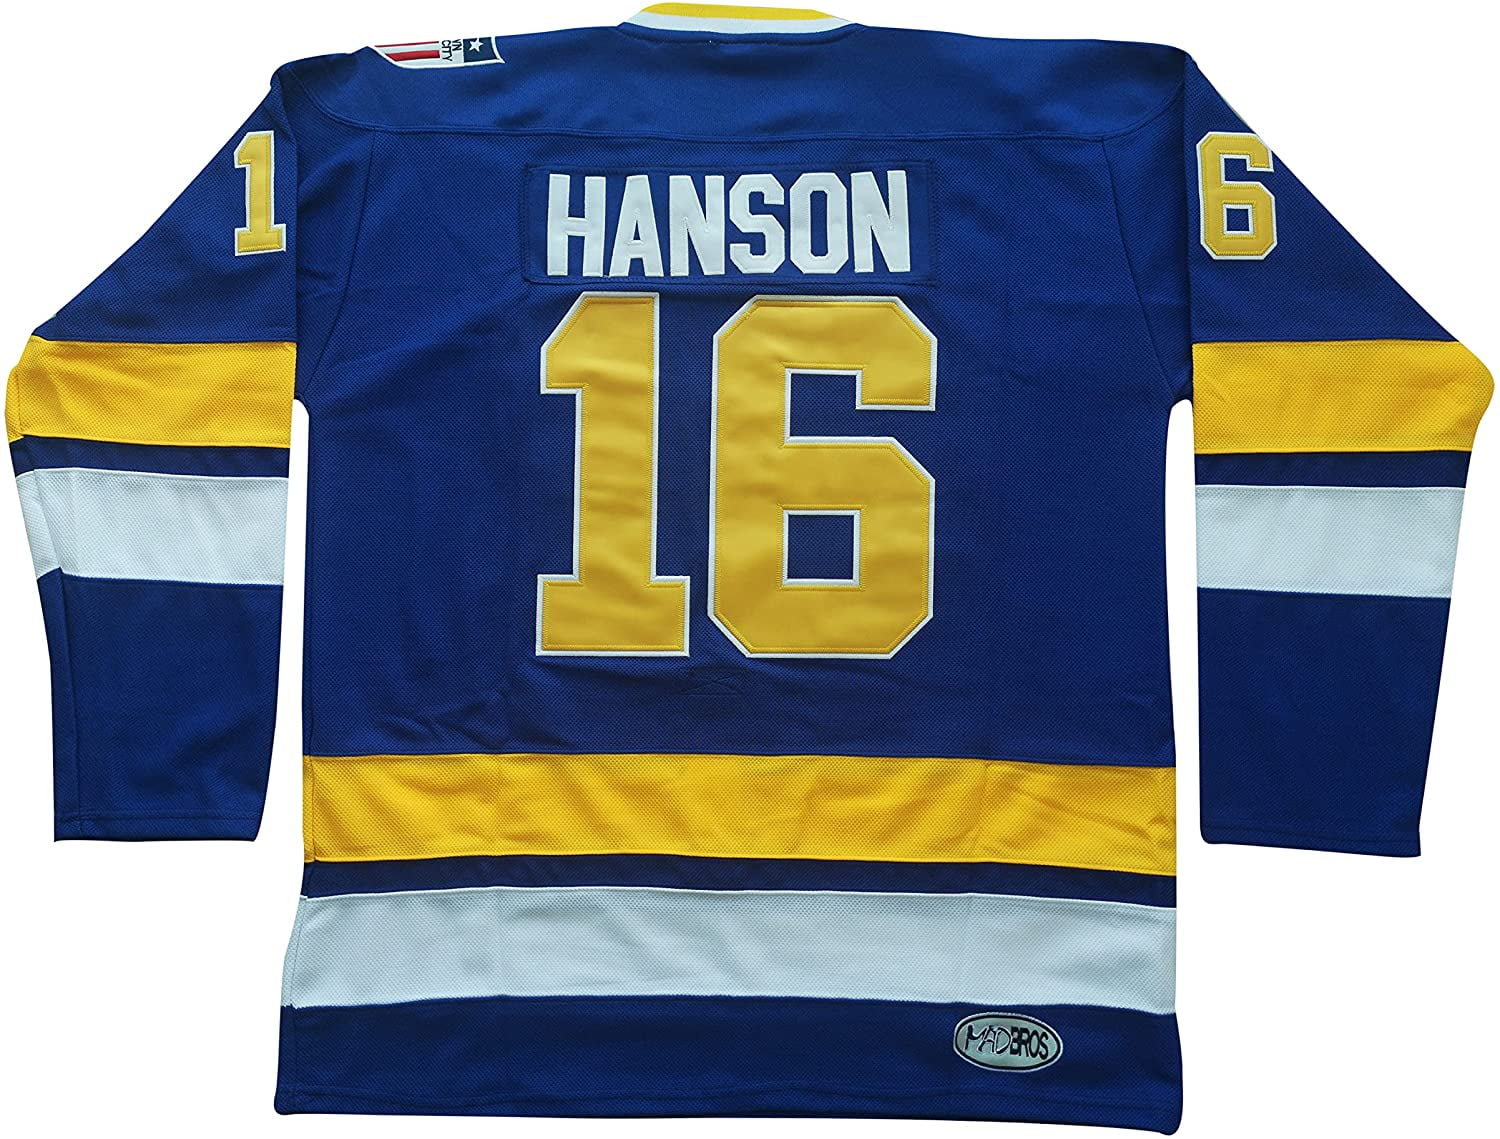 17# Jack Hanson Charlestown Chiefs Jersey Slap Shot Movie Hockey Stitched White 